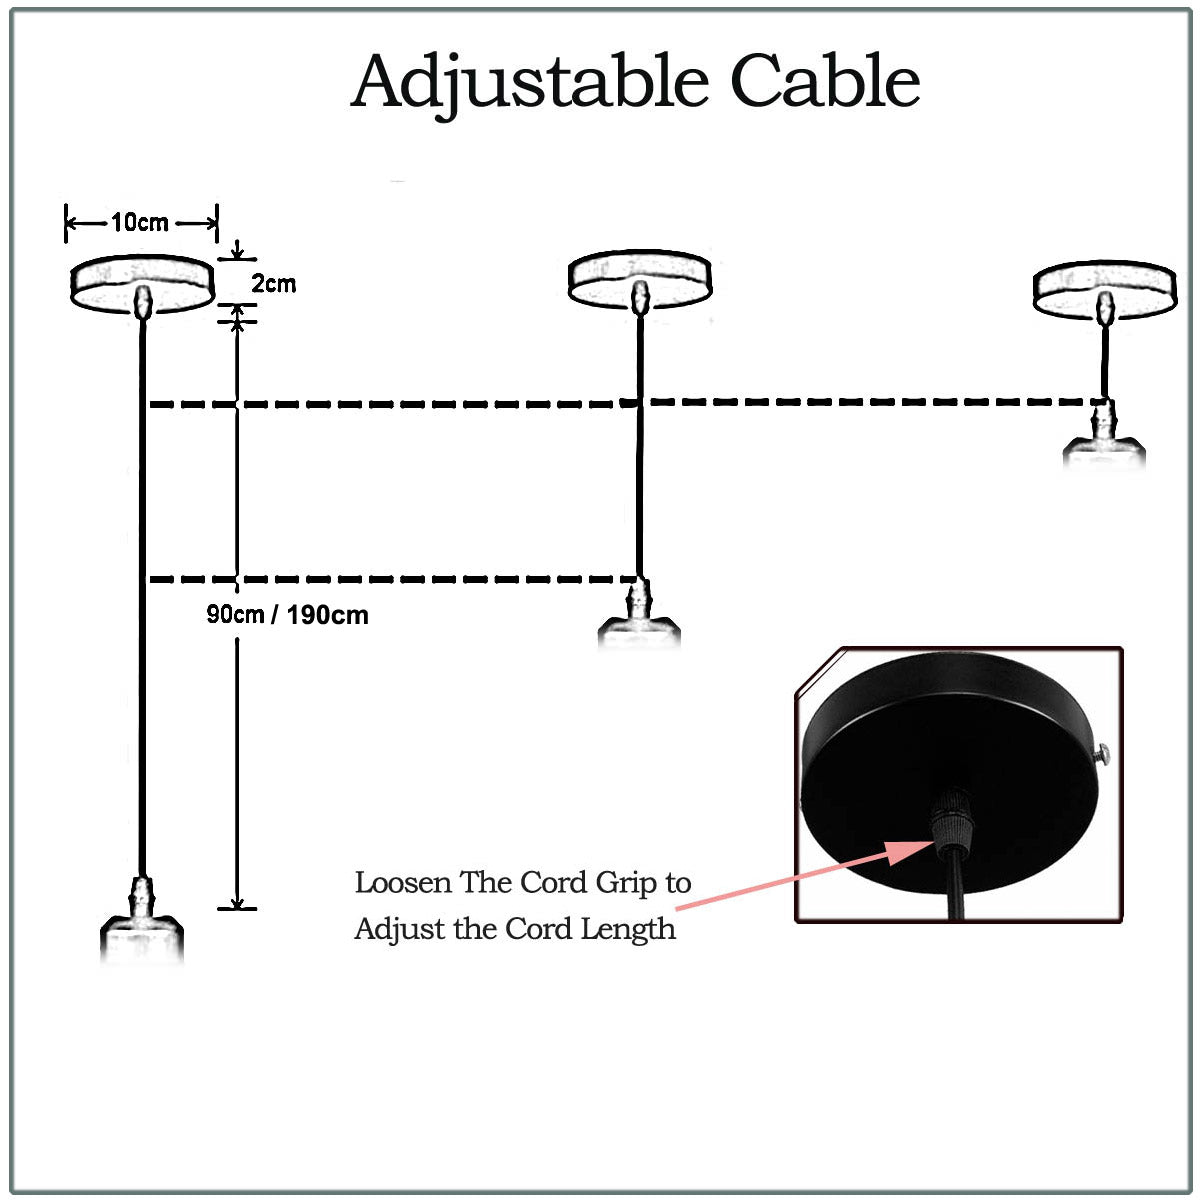 1m Black Twisted Cable E27 Base Black Holder~1715 - LEDSone UK Ltd